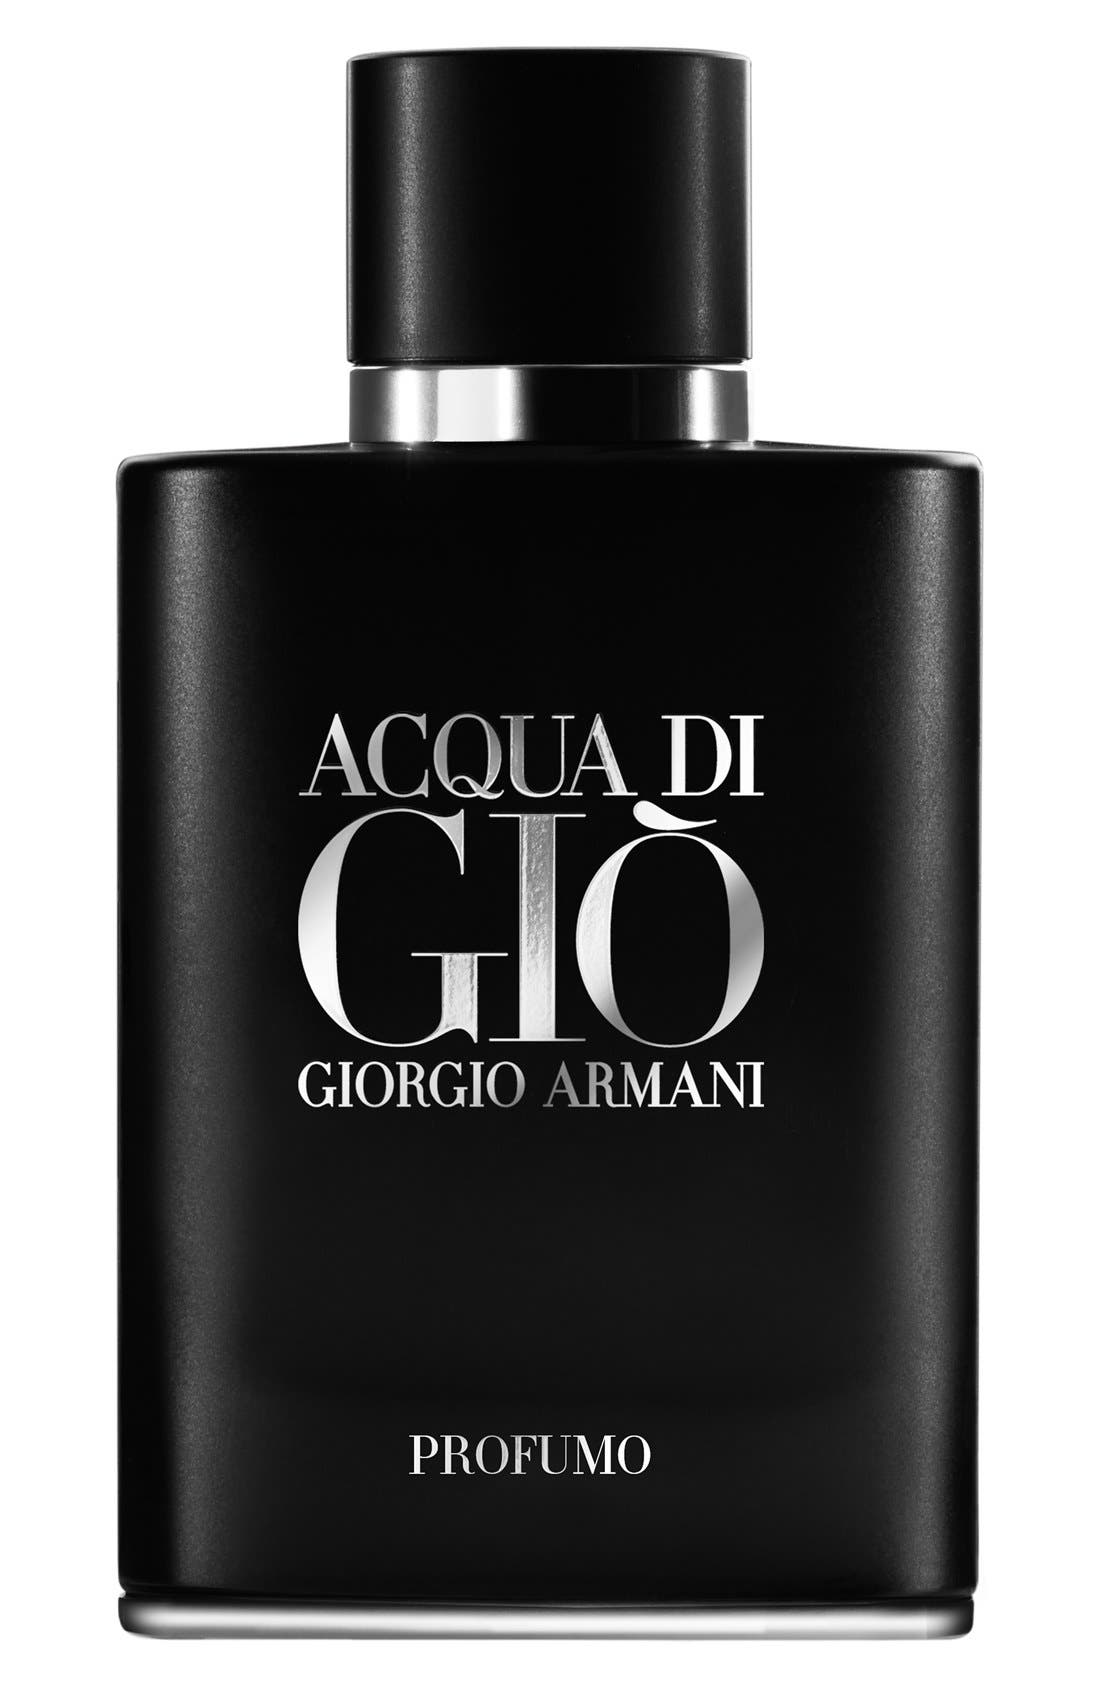 armani cologne black bottle